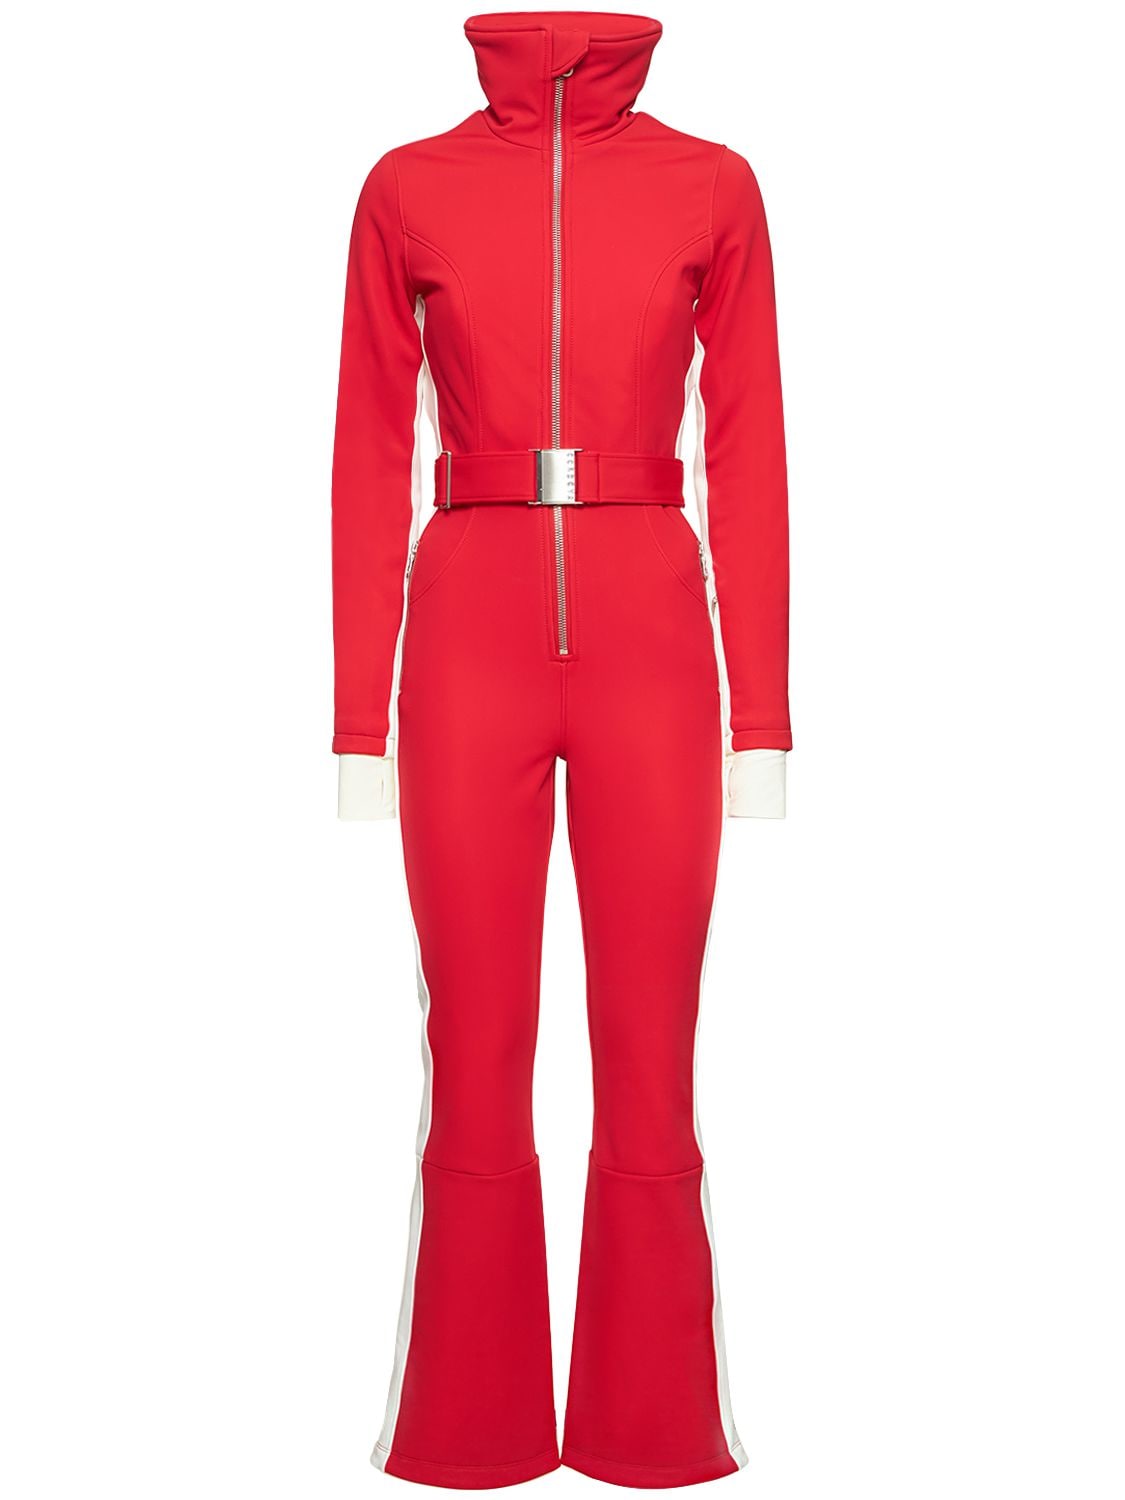 Cordova Otb Ski Suit In Red